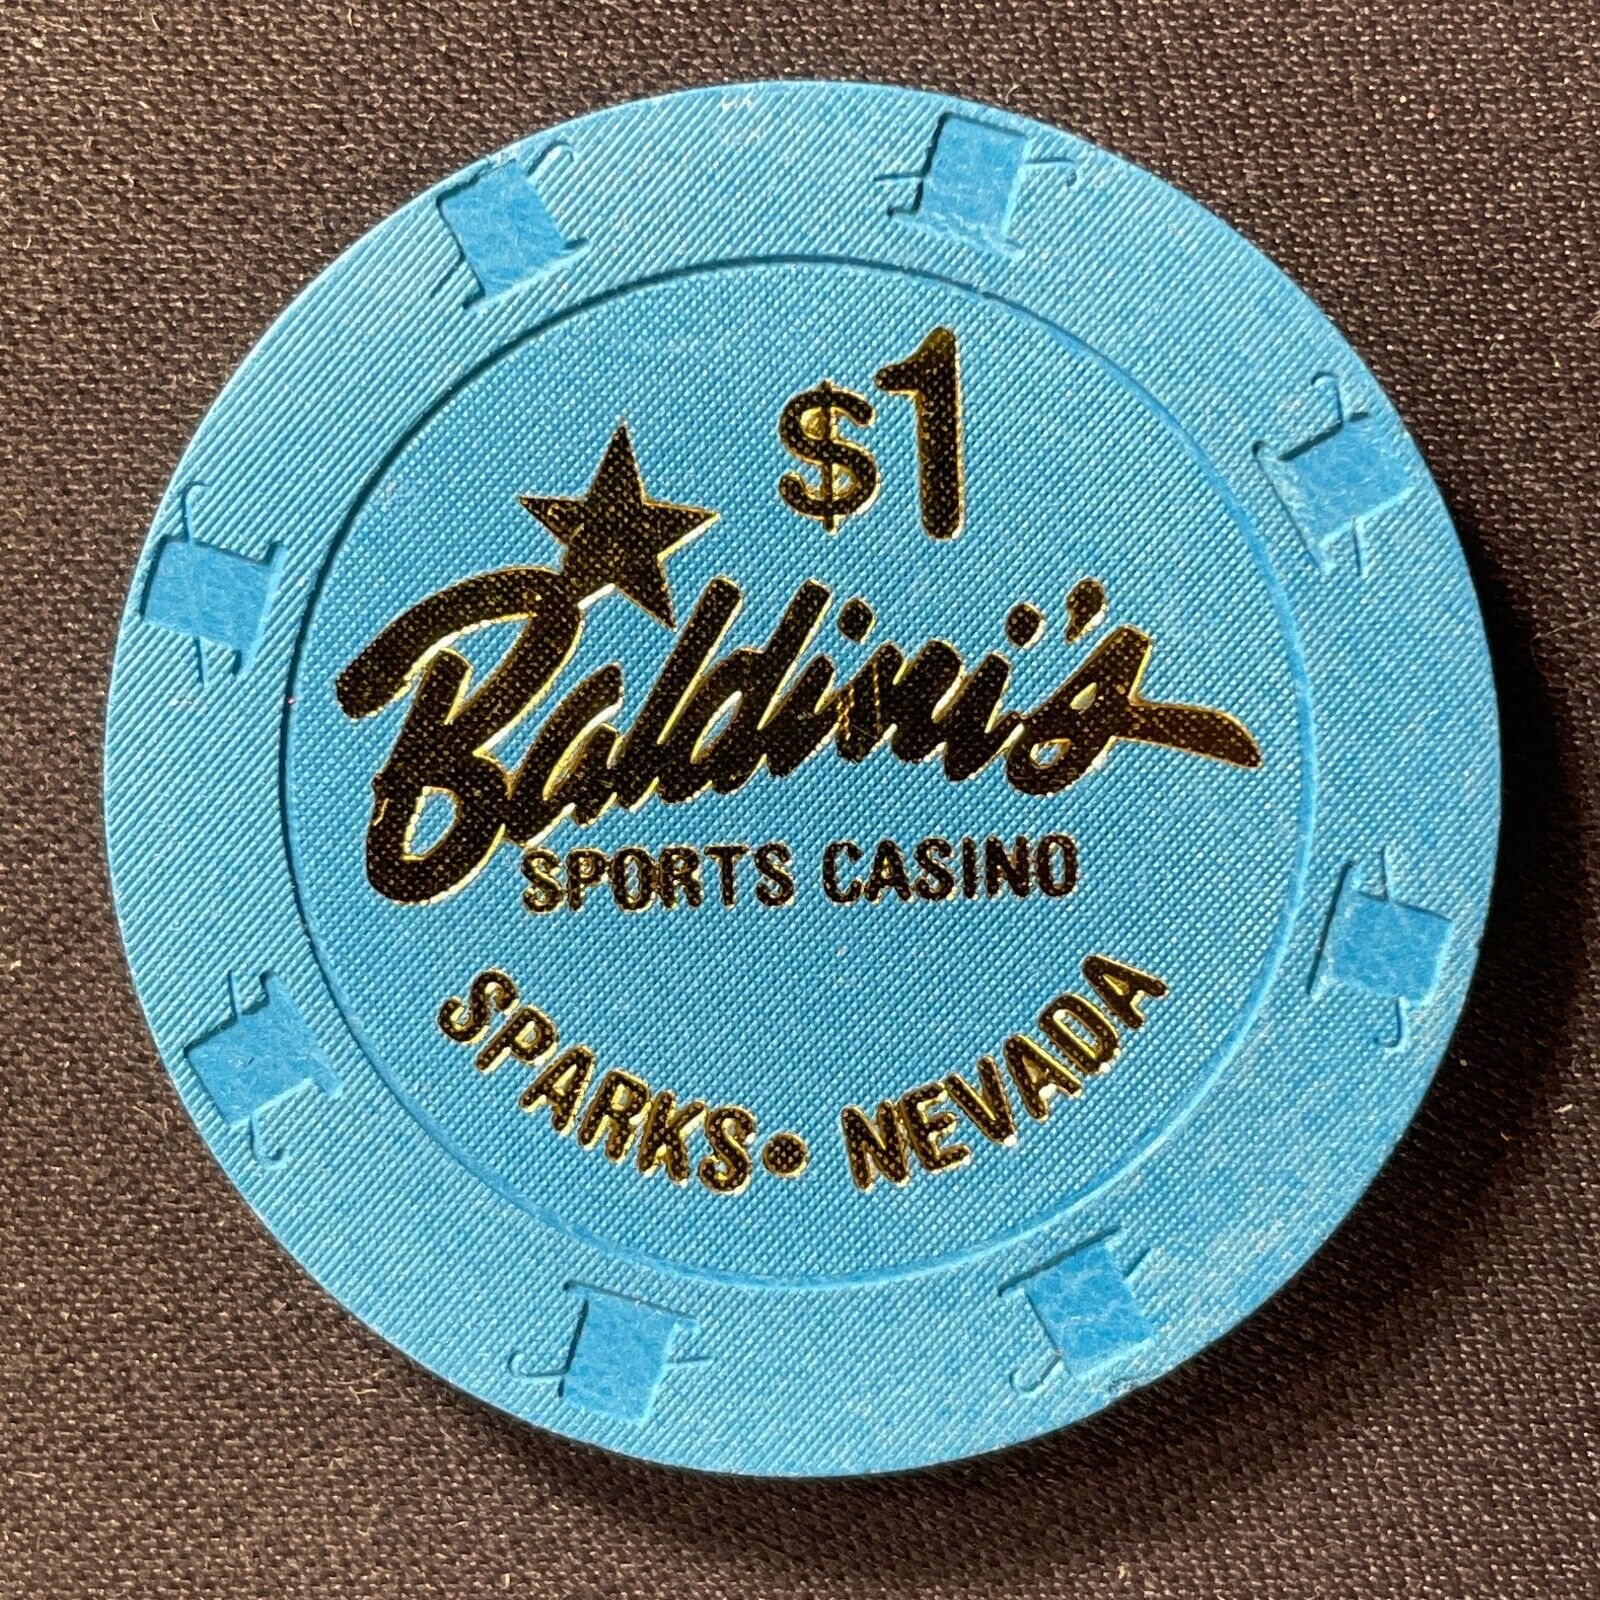 Baldini's Sports Sparks Nevada $1 casino chip gaming token poker chip M1